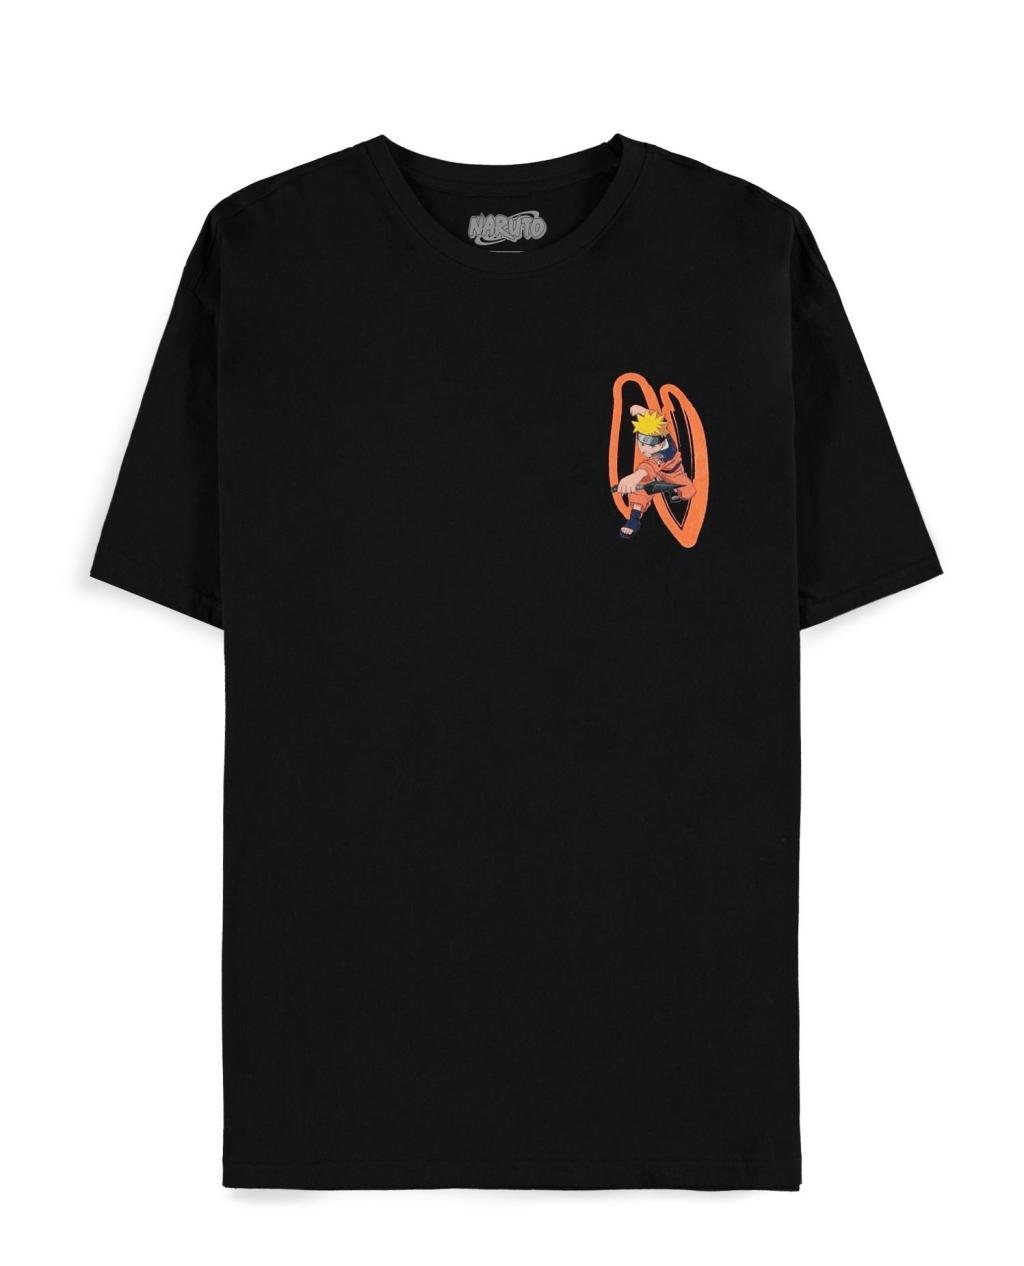 NARUTO - Ninja Way - Men T-Shirt (M)